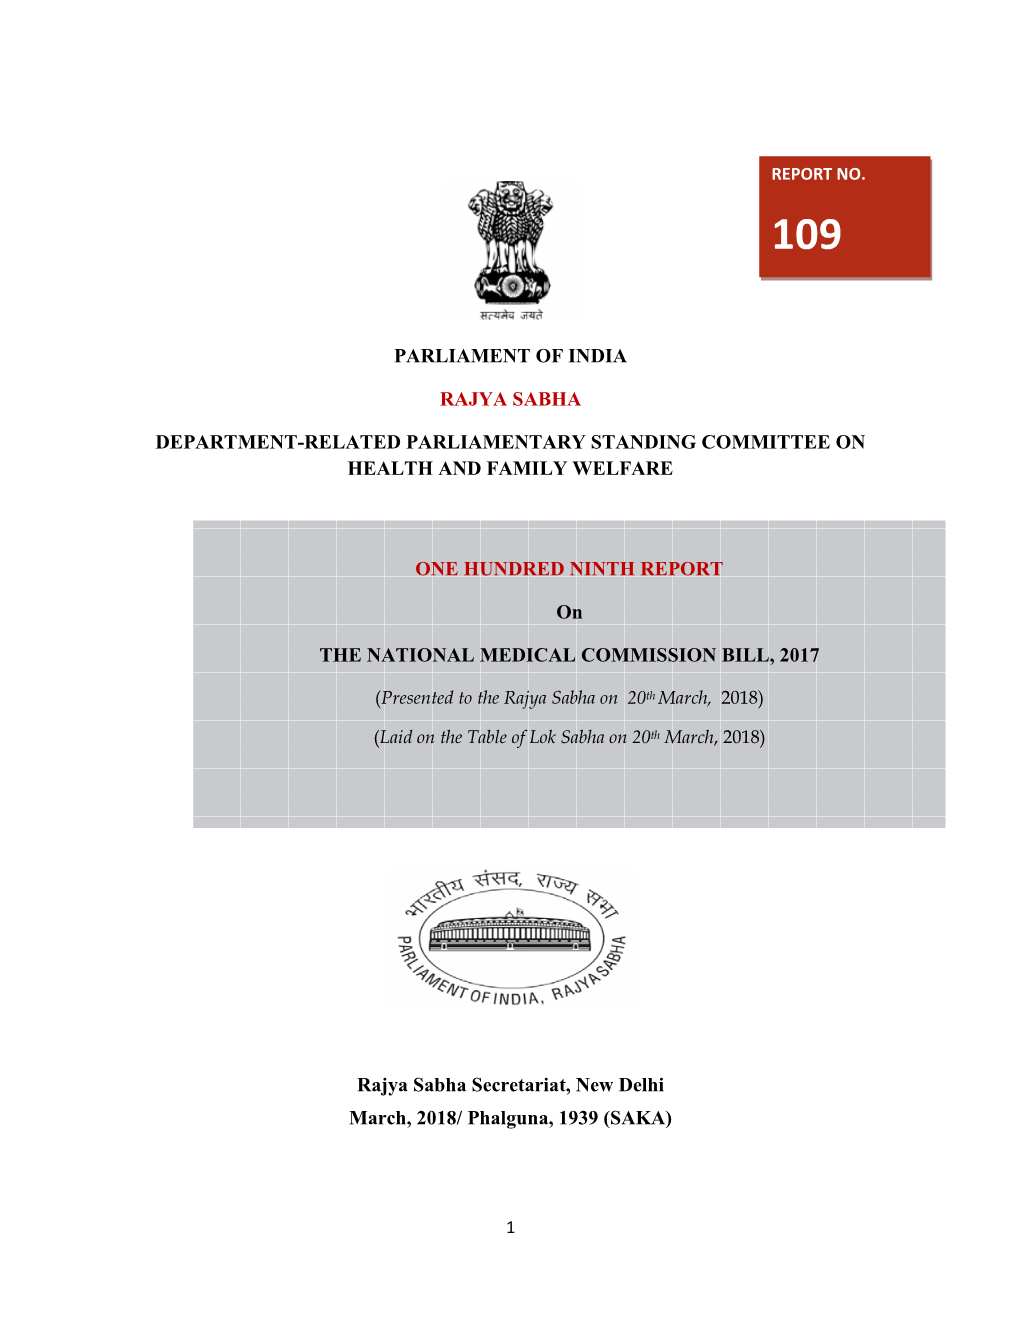 Parliament of India Rajya Sabha Department-Related